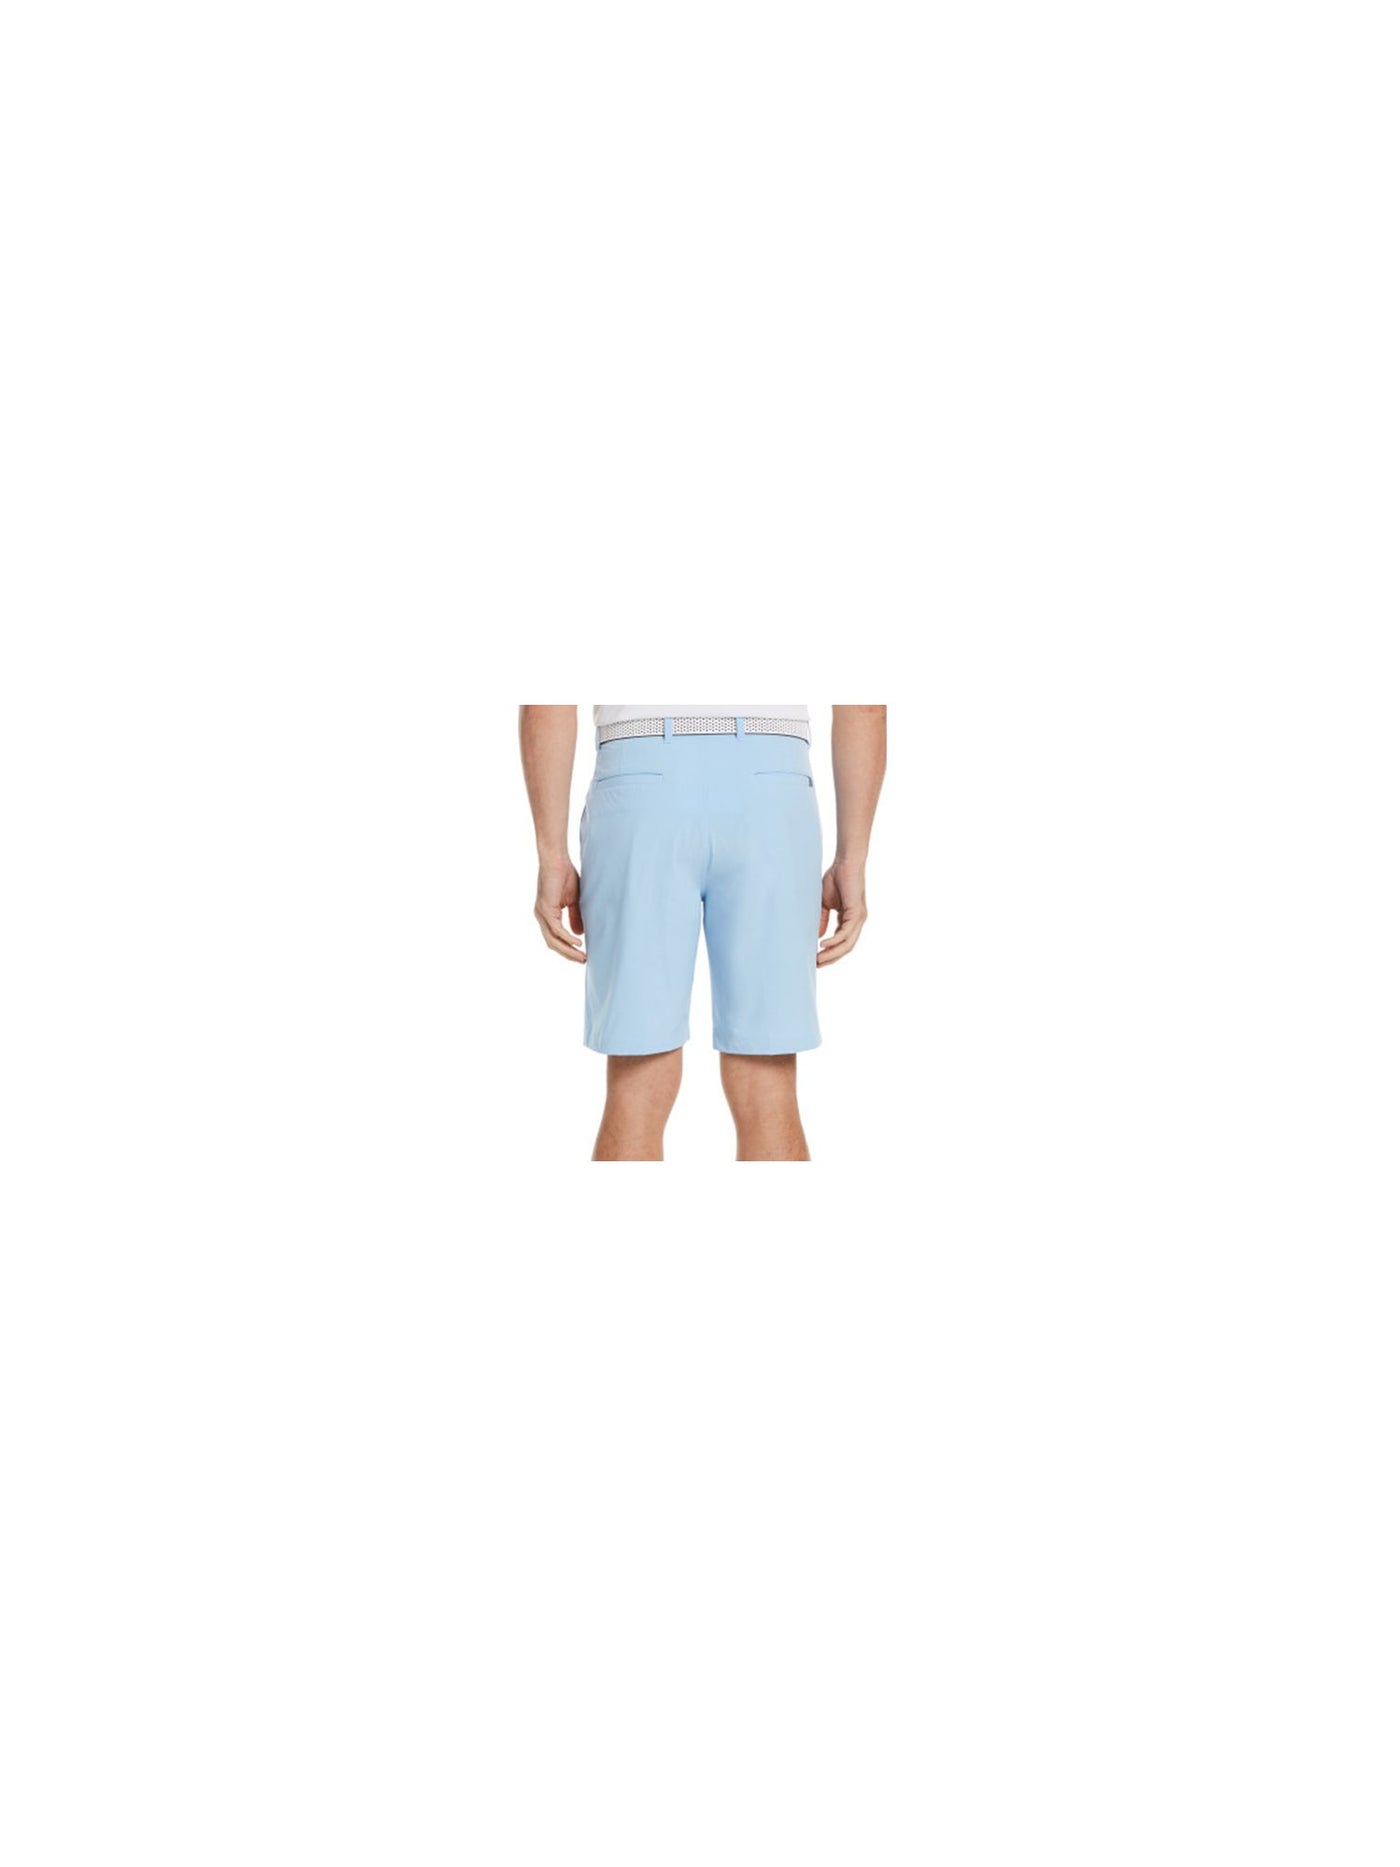 HYBRID APPAREL Mens Light Blue Flat Front, Moisture Wicking Athletic Shorts 36 Waist